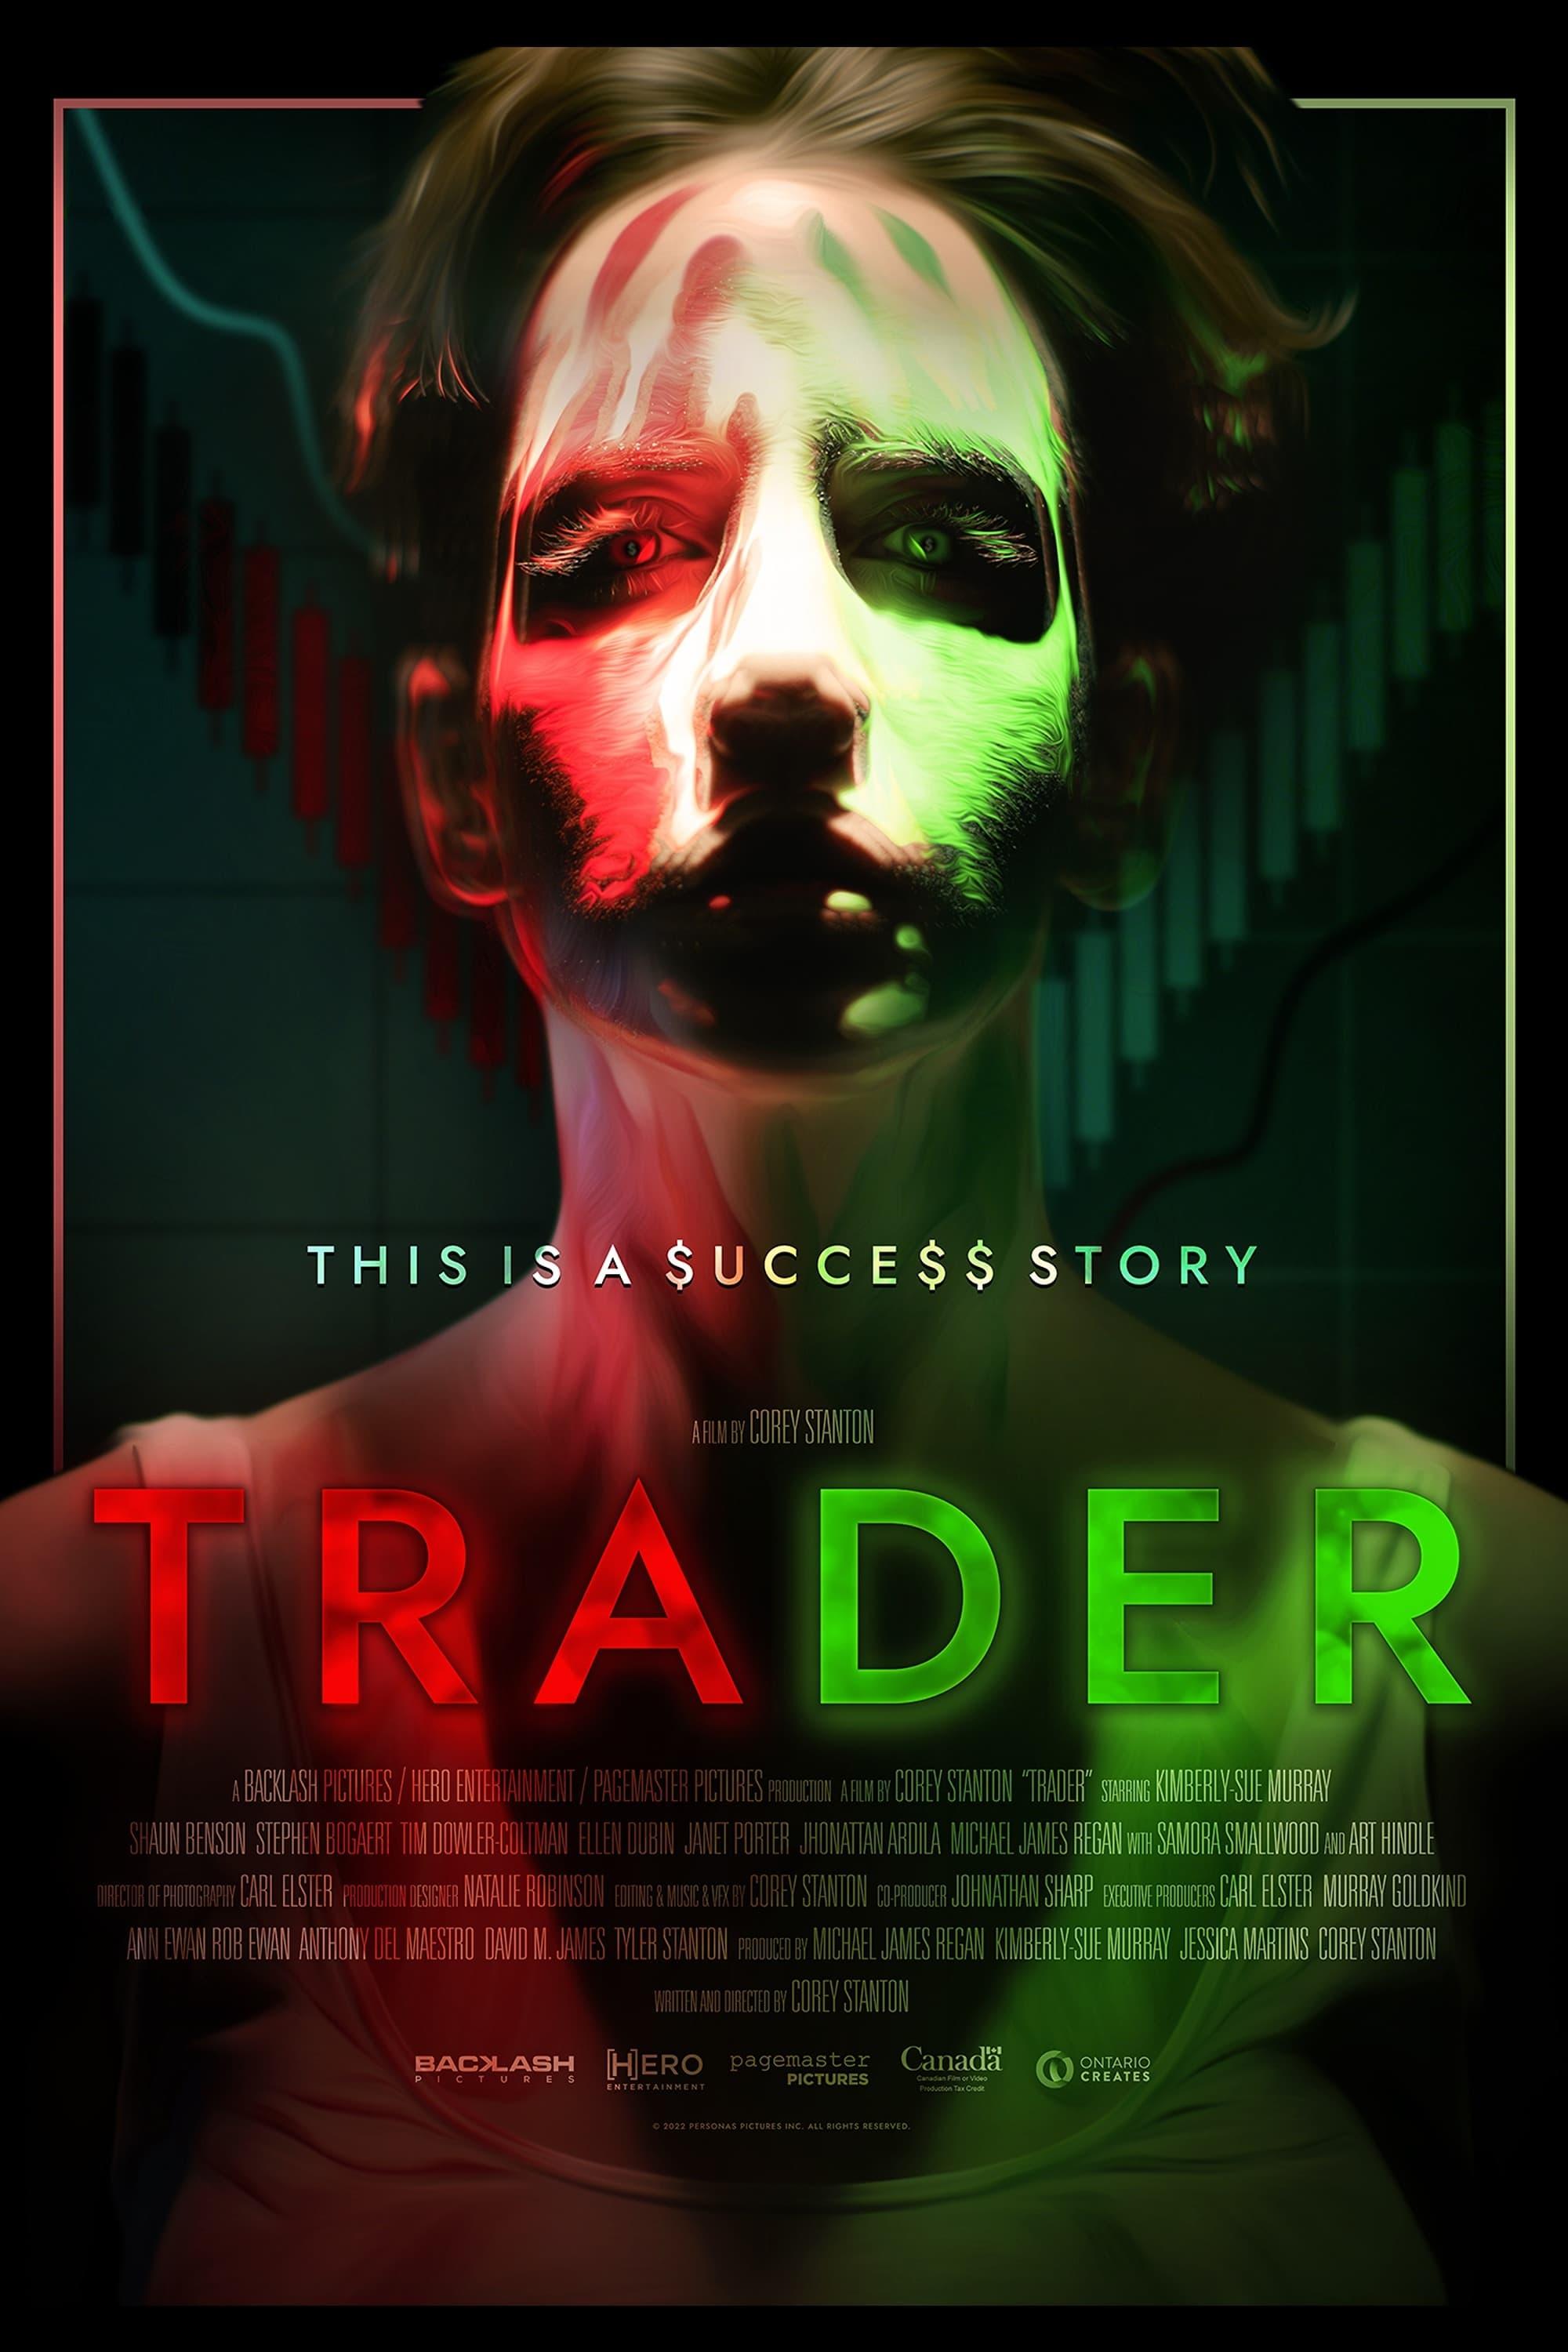 Trader poster